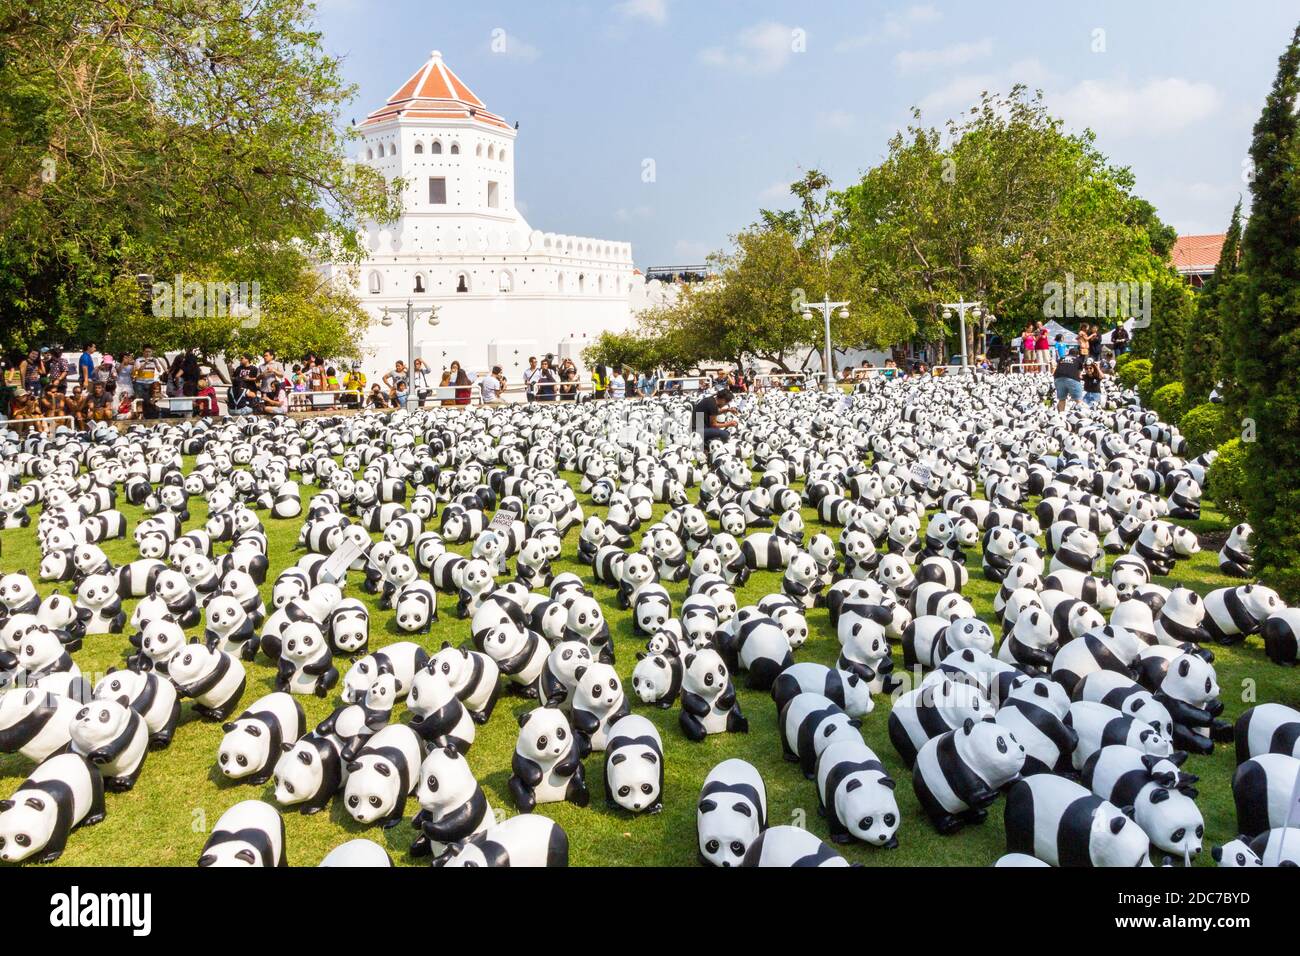 The 1600s Pandas art installation by Paulo Grangeon in Bangkok, Thailand Stock Photo